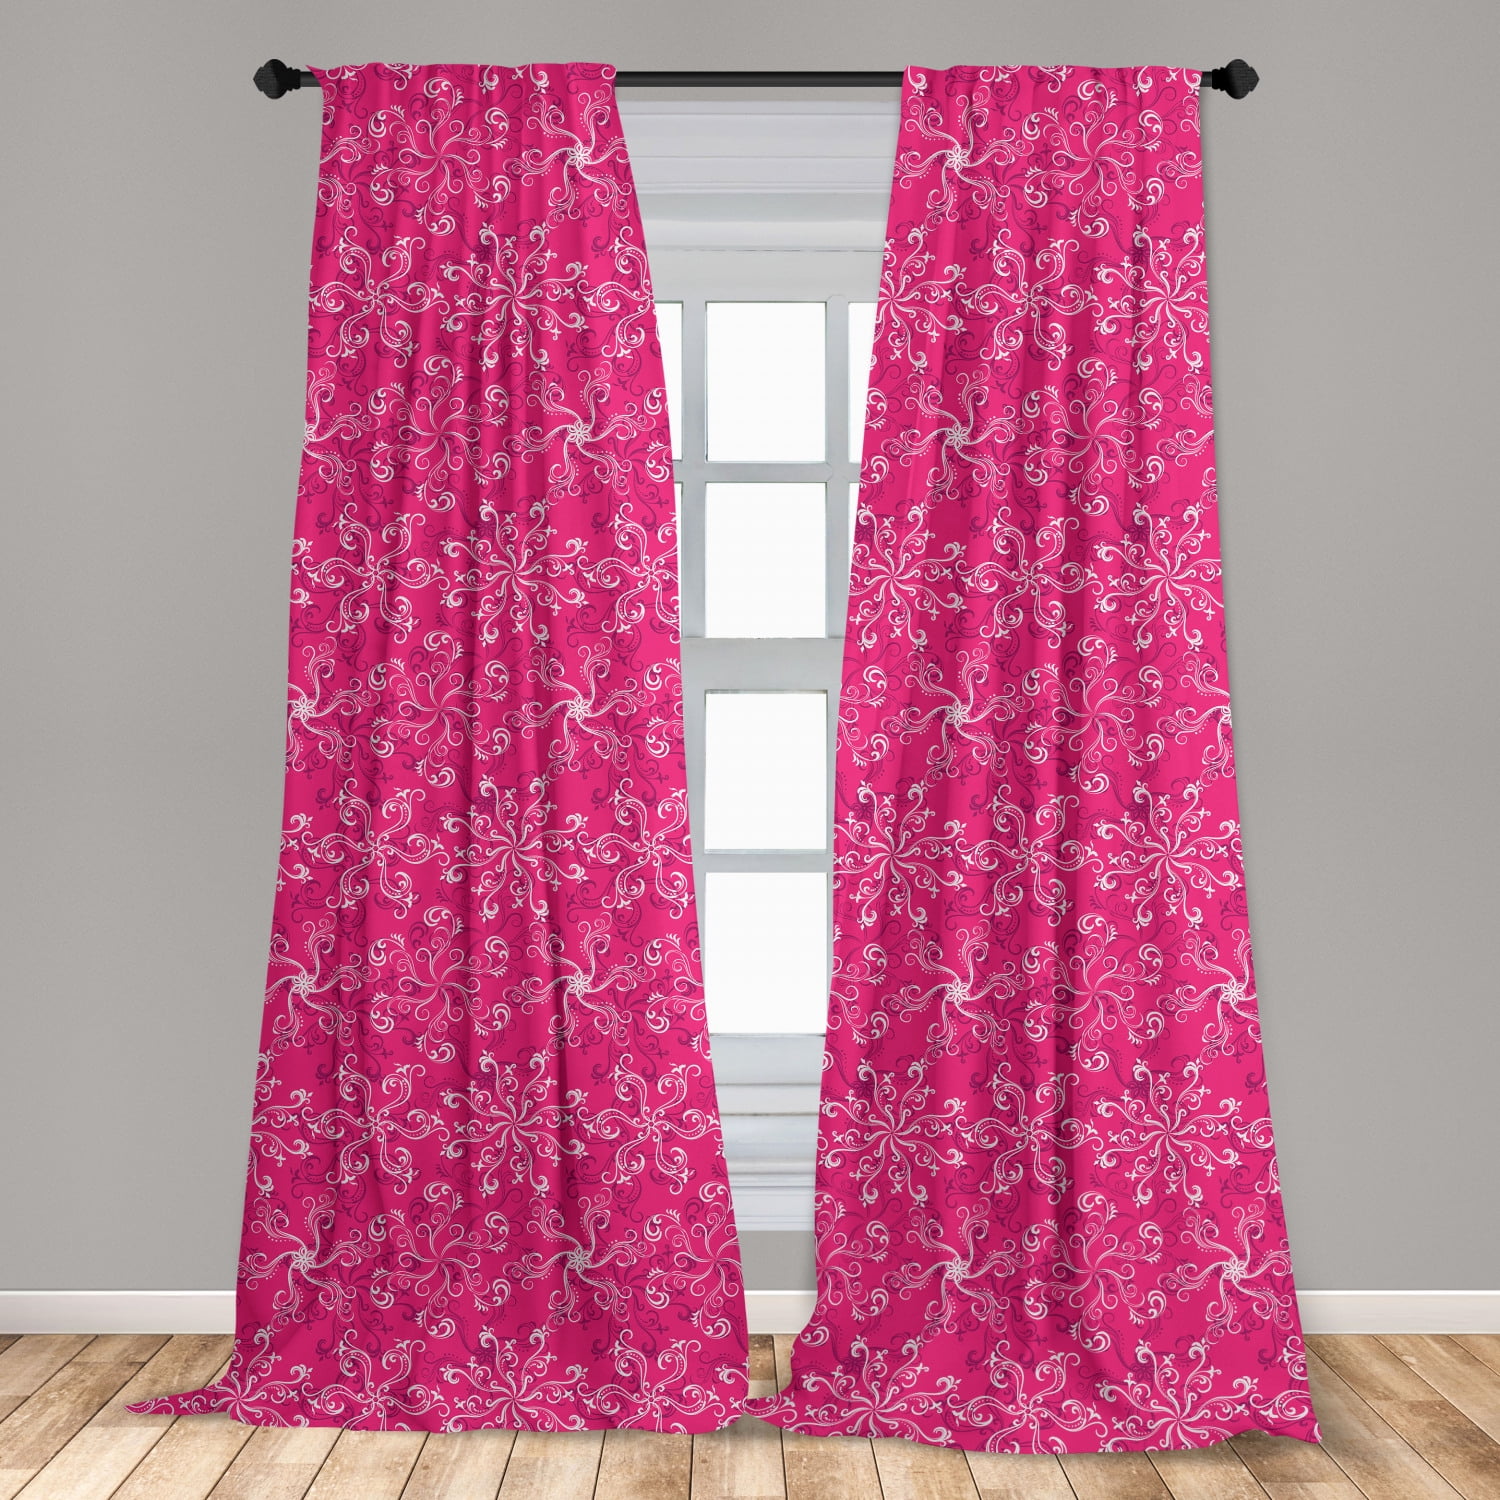 Hot Pink Curtains 2 Panels Set, Floral Arrangement Pattern on Hot Pink  Background Spring Flourish Bloom, Window Drapes for Living Room Bedroom,  56